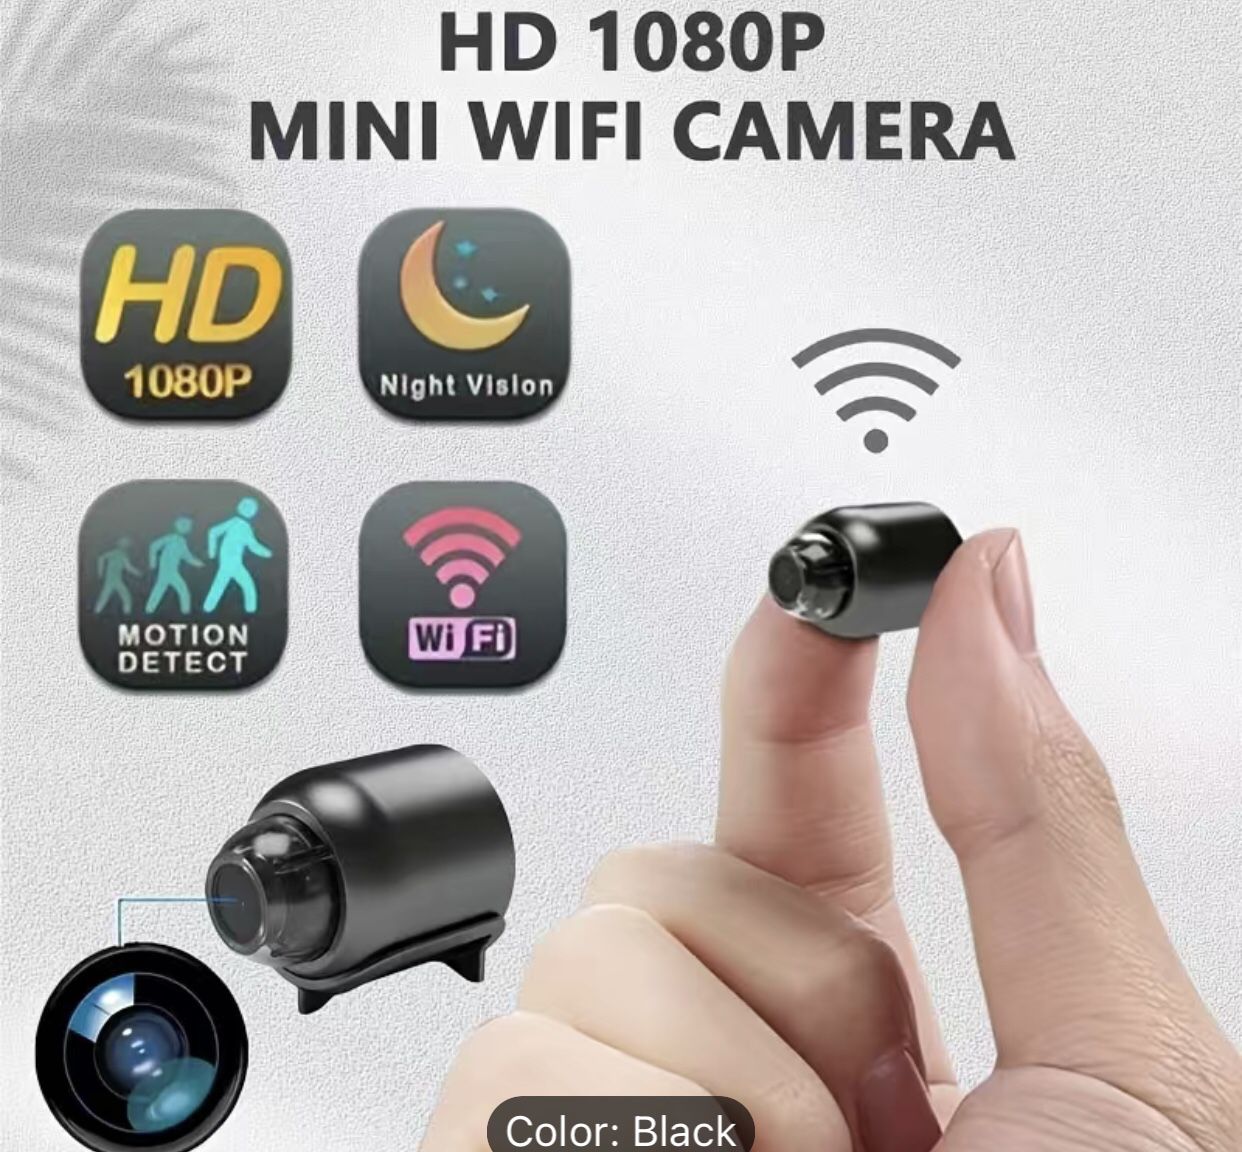 New In Box Upgraded HD 1080P Mini smart Wifi Camera Night Vision Motion Detection Alarm Micro,Remote Wireless Camcorder Video Surveillance Portable 2.